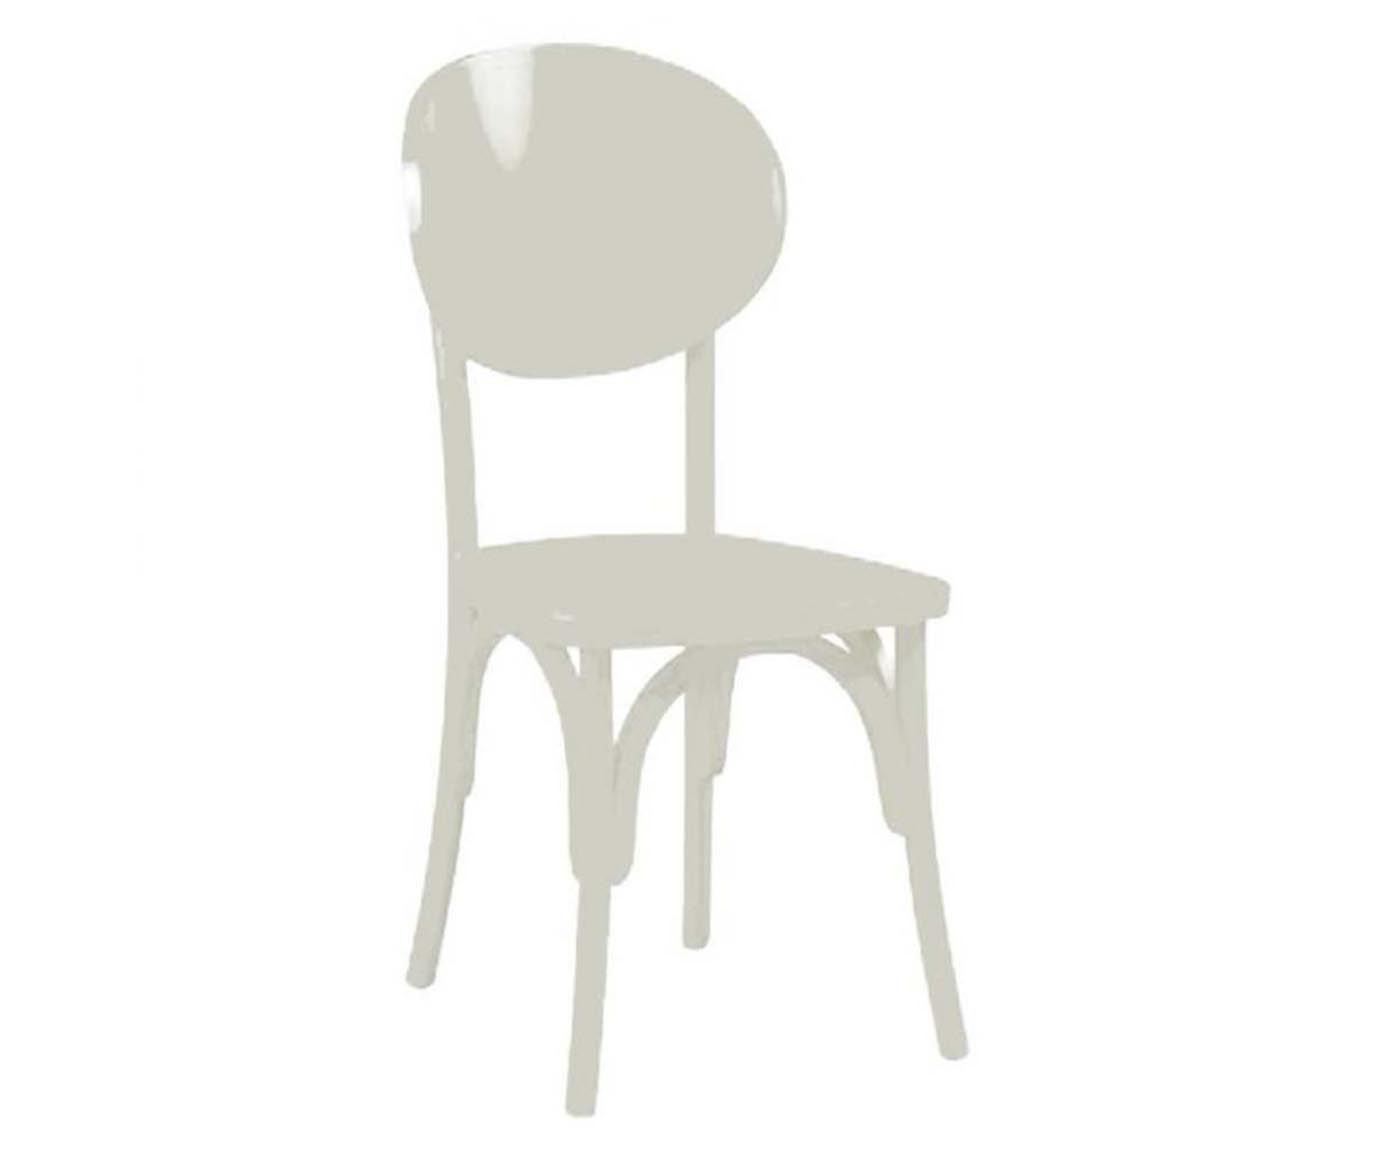 Cadeira romarin round - union | Westwing.com.br